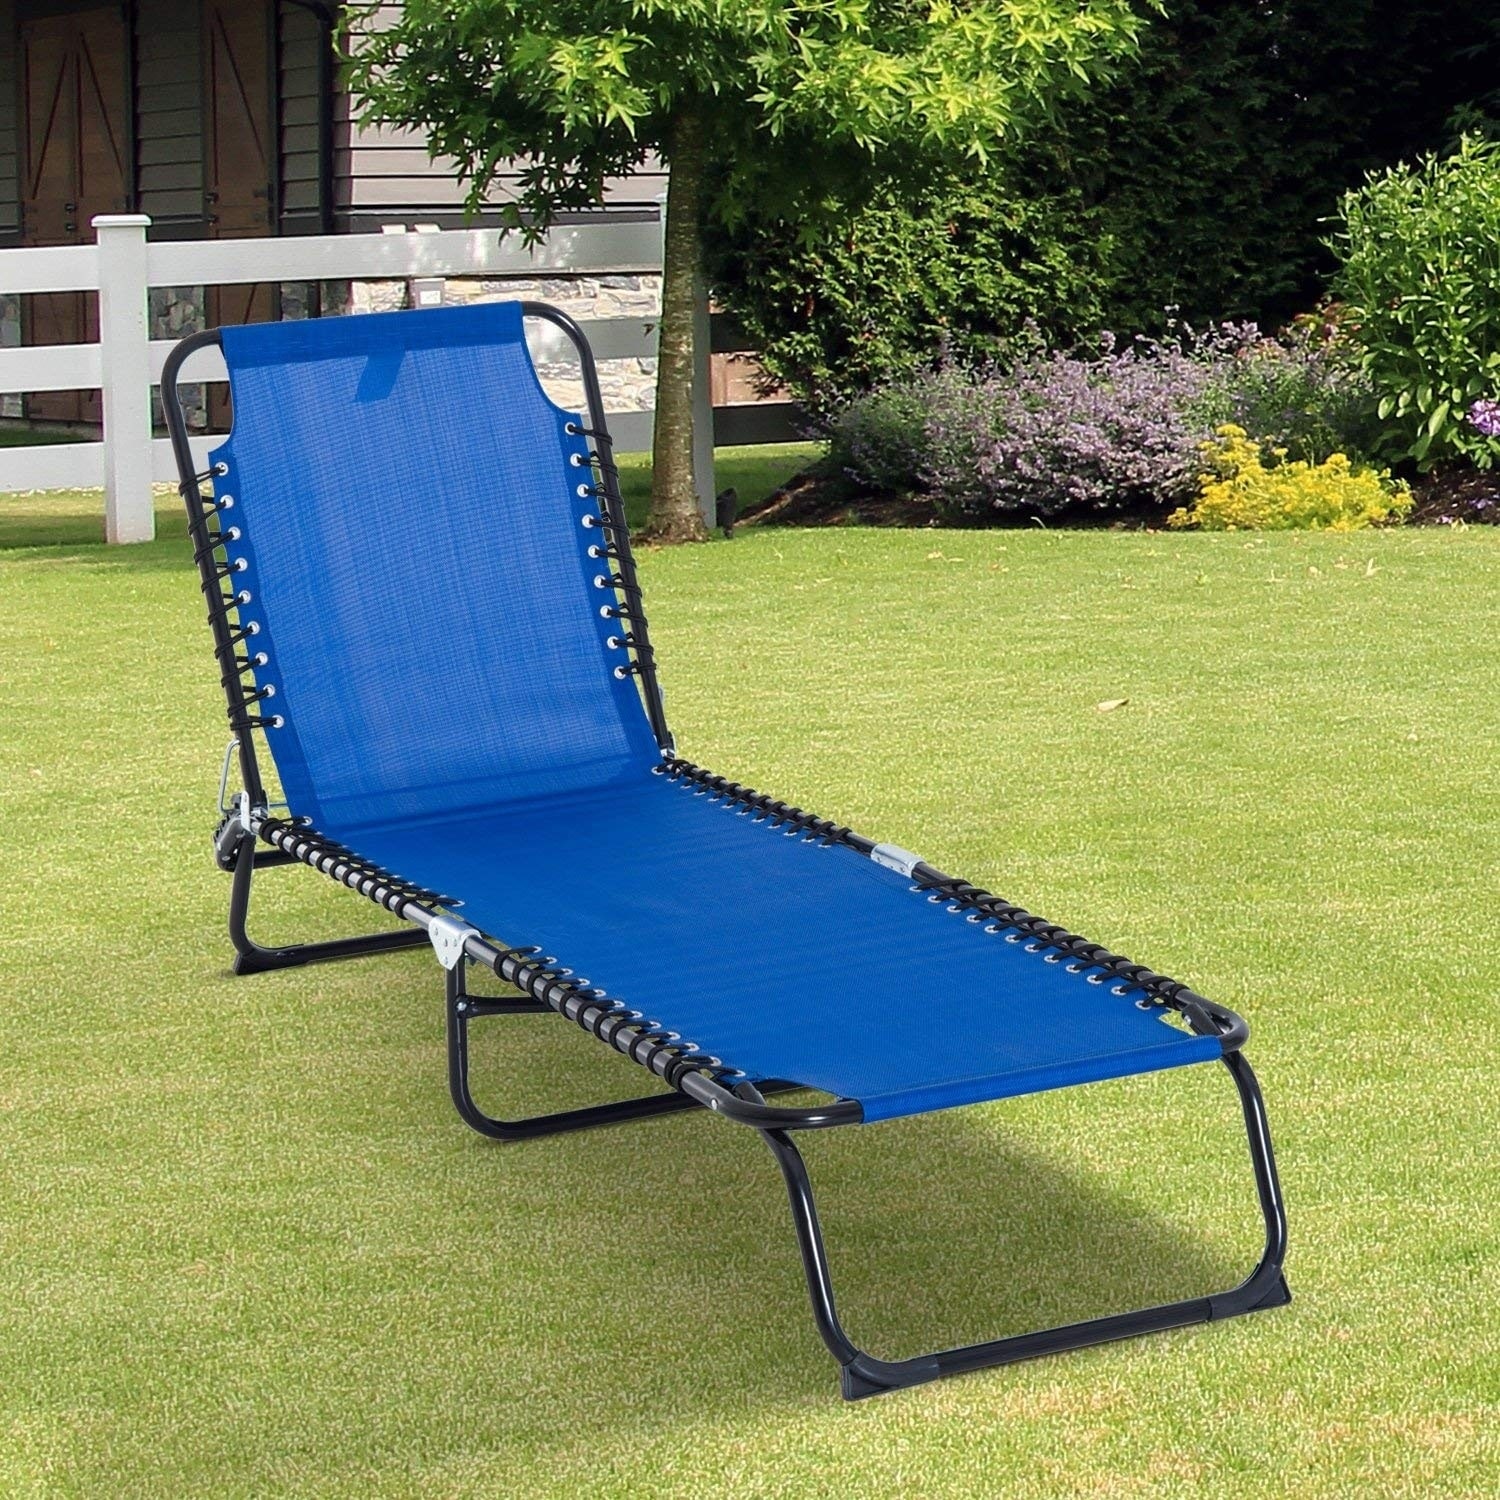 Creatice Beach Garden Chair for Simple Design